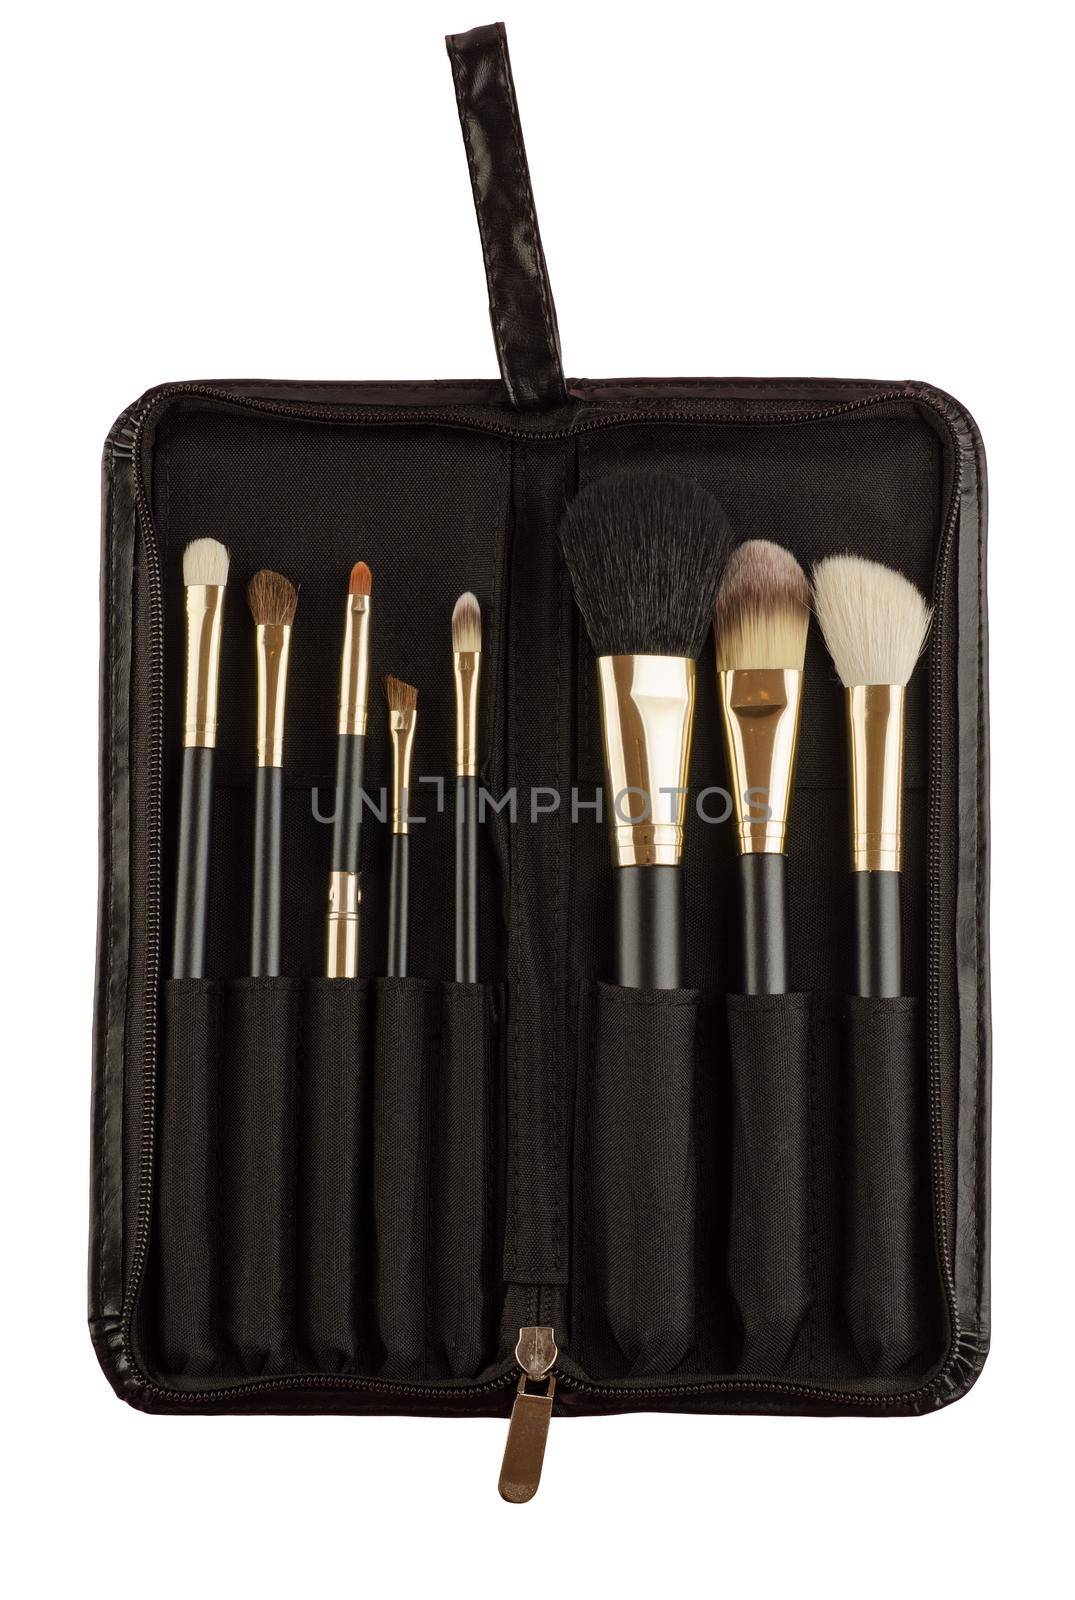 Makeup artist brush kit by nikitabuida